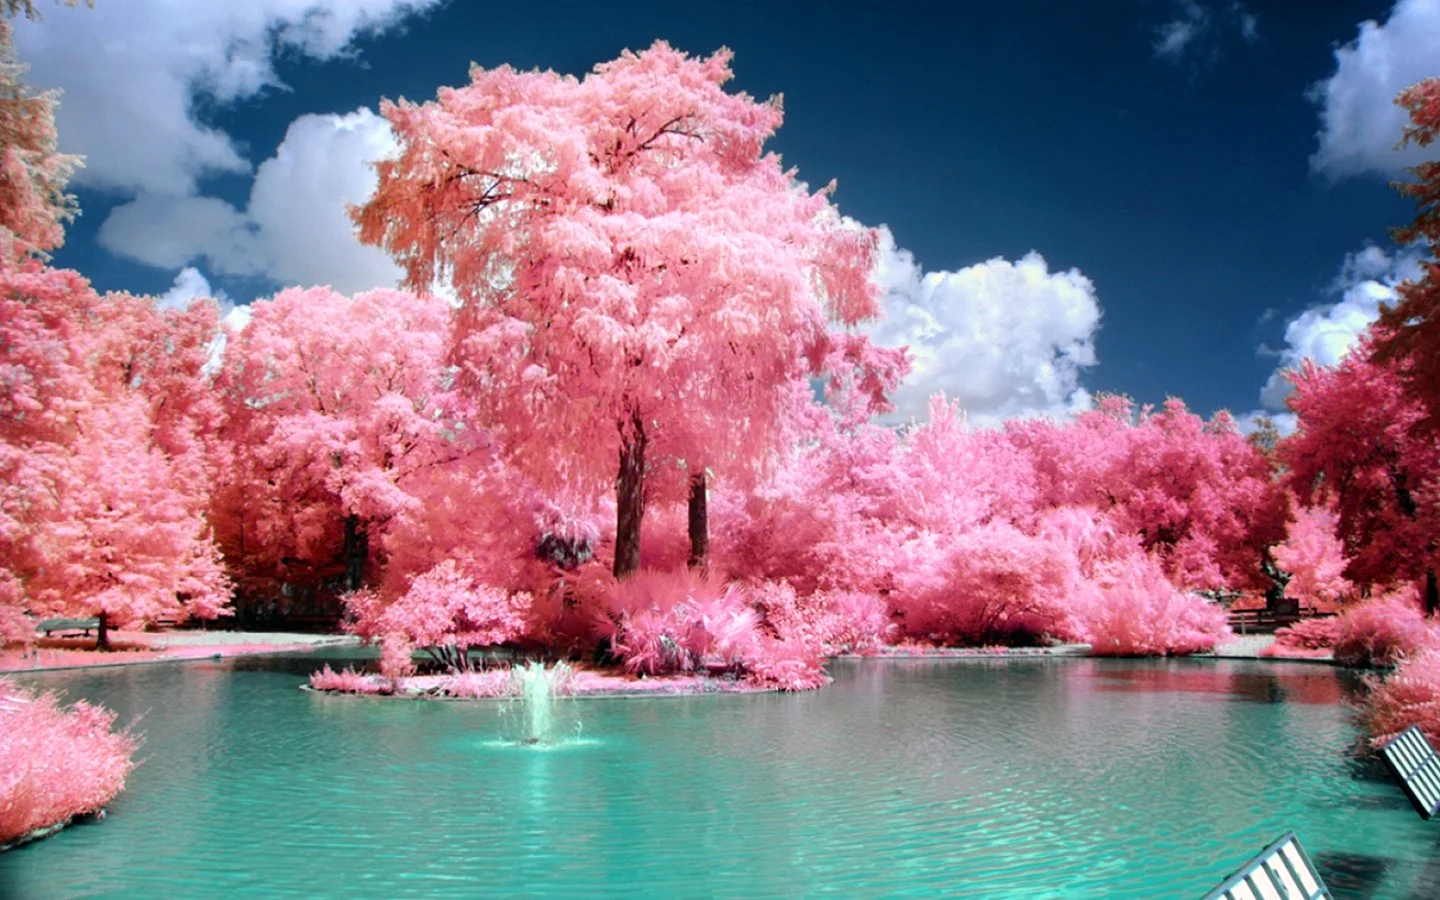 Pink nature